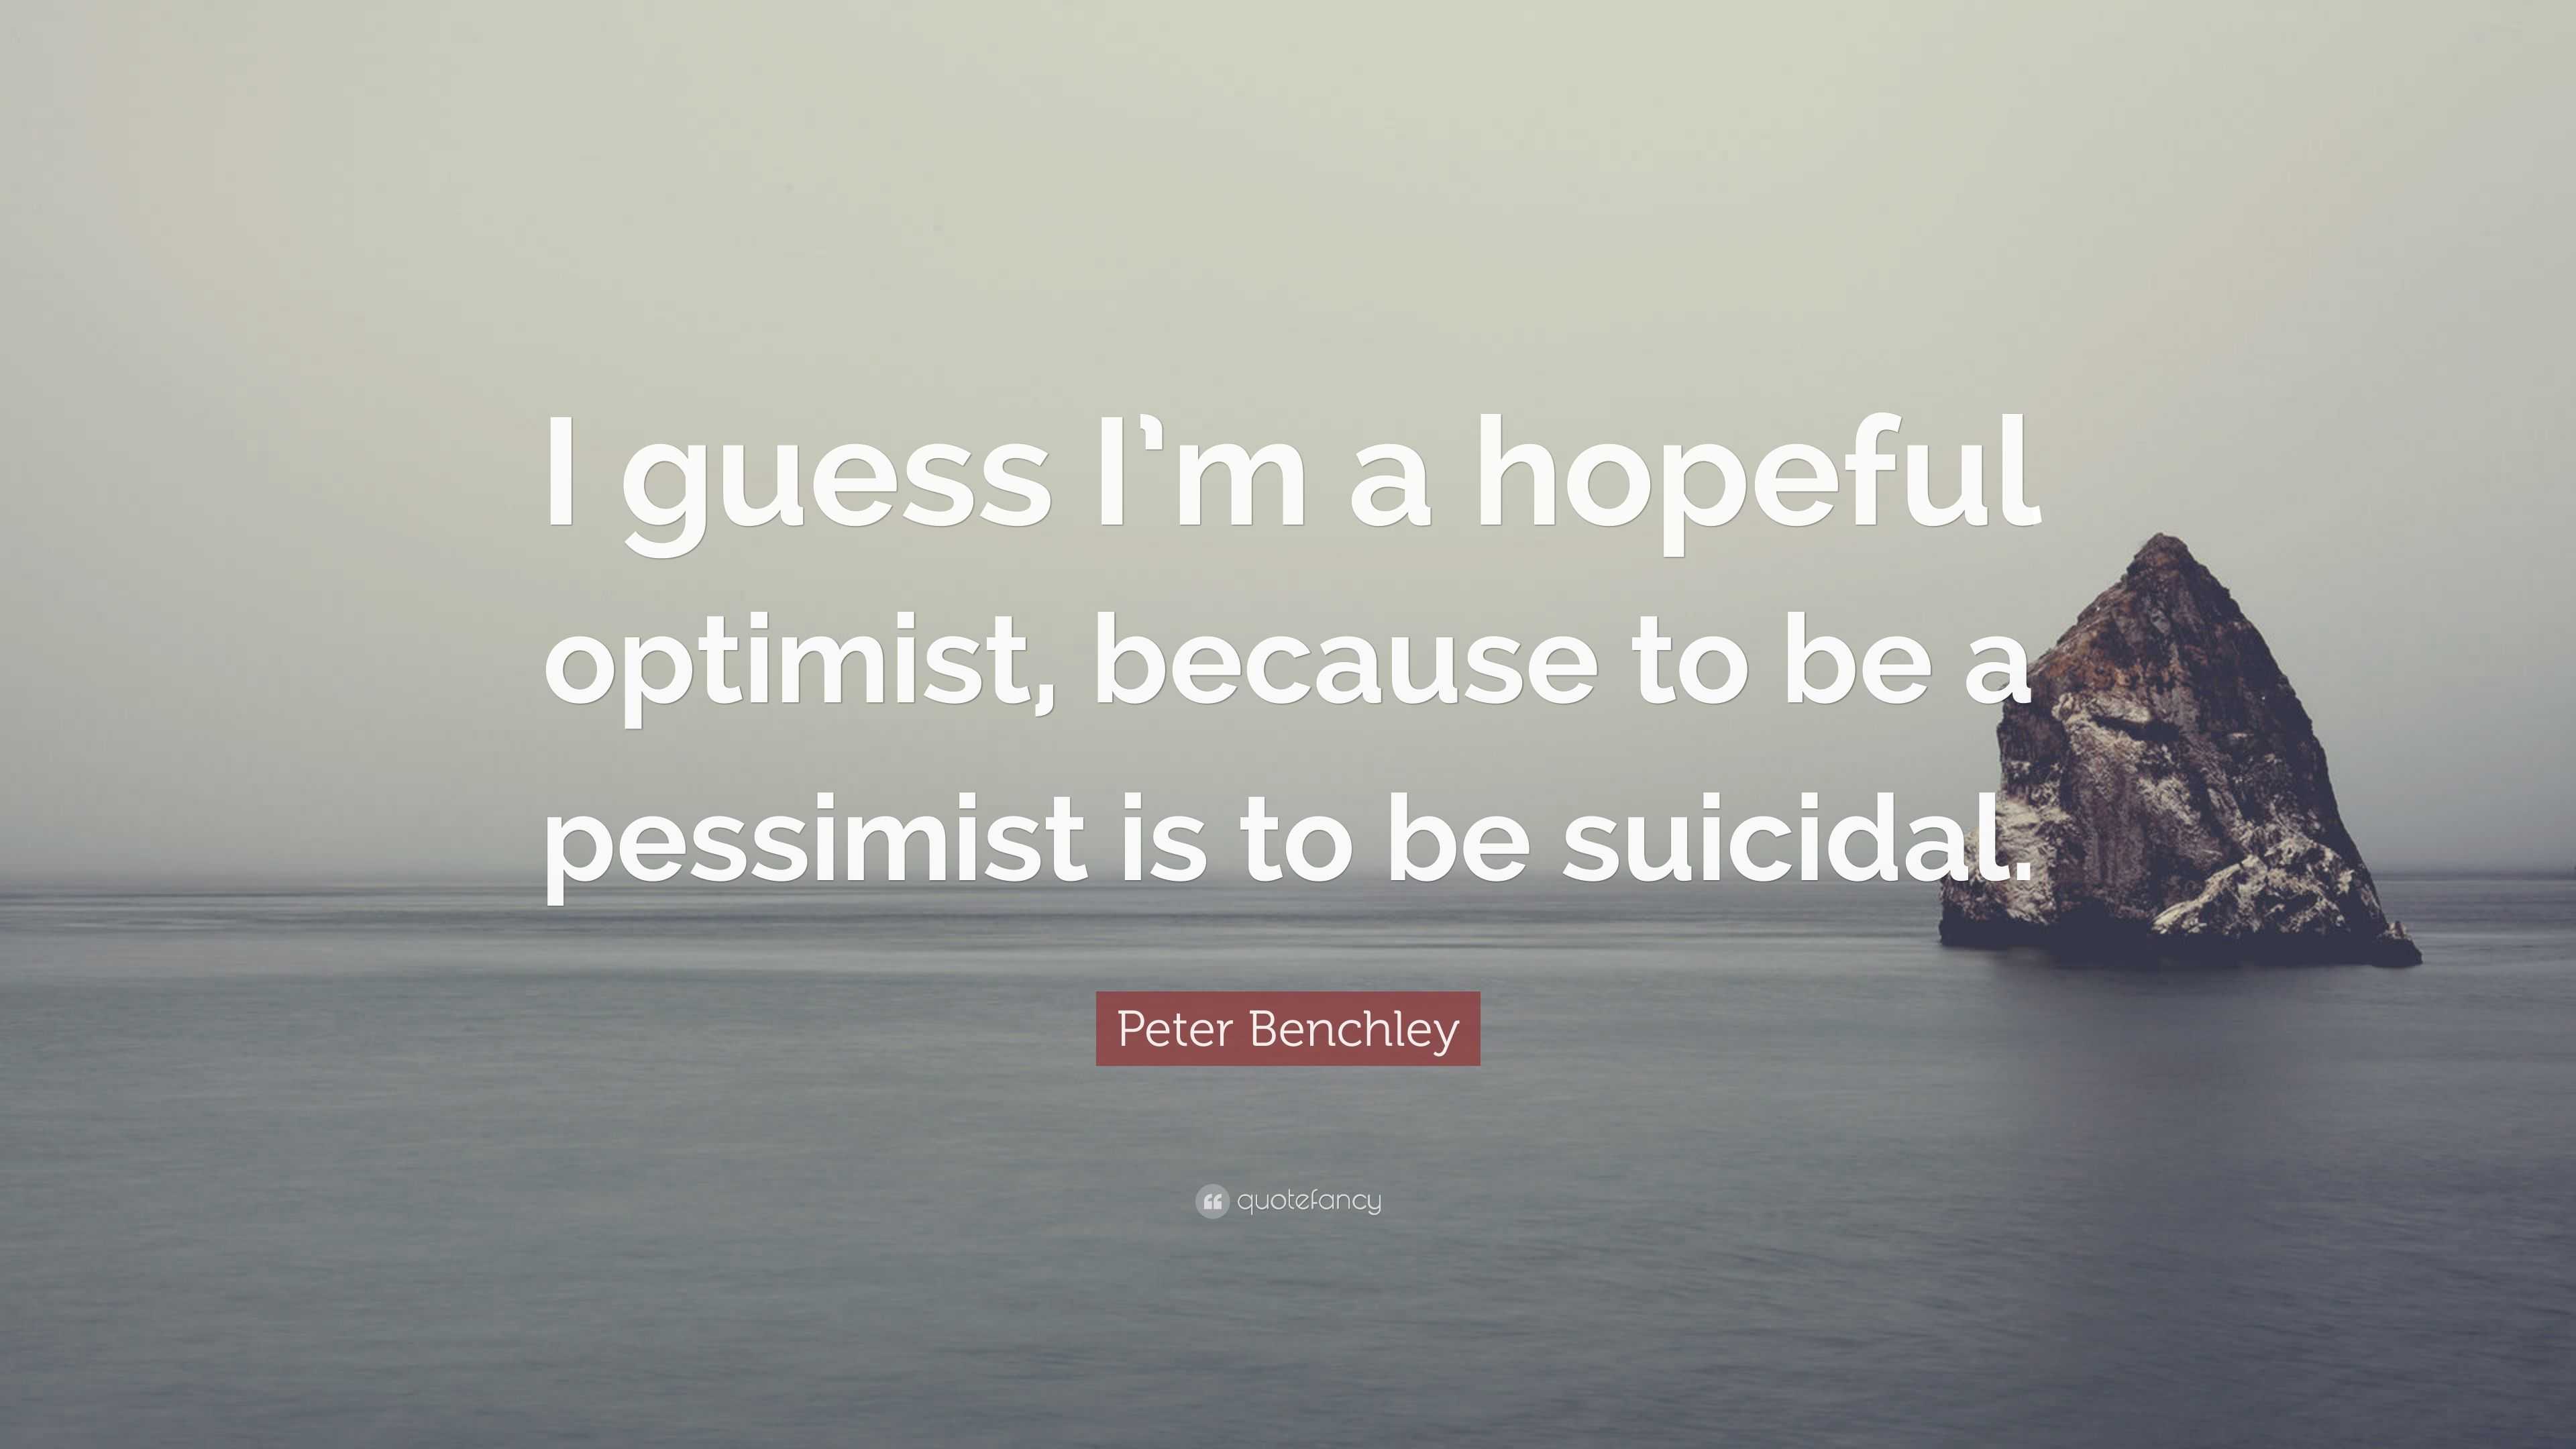 hopeful optimism and suicidal pessimism